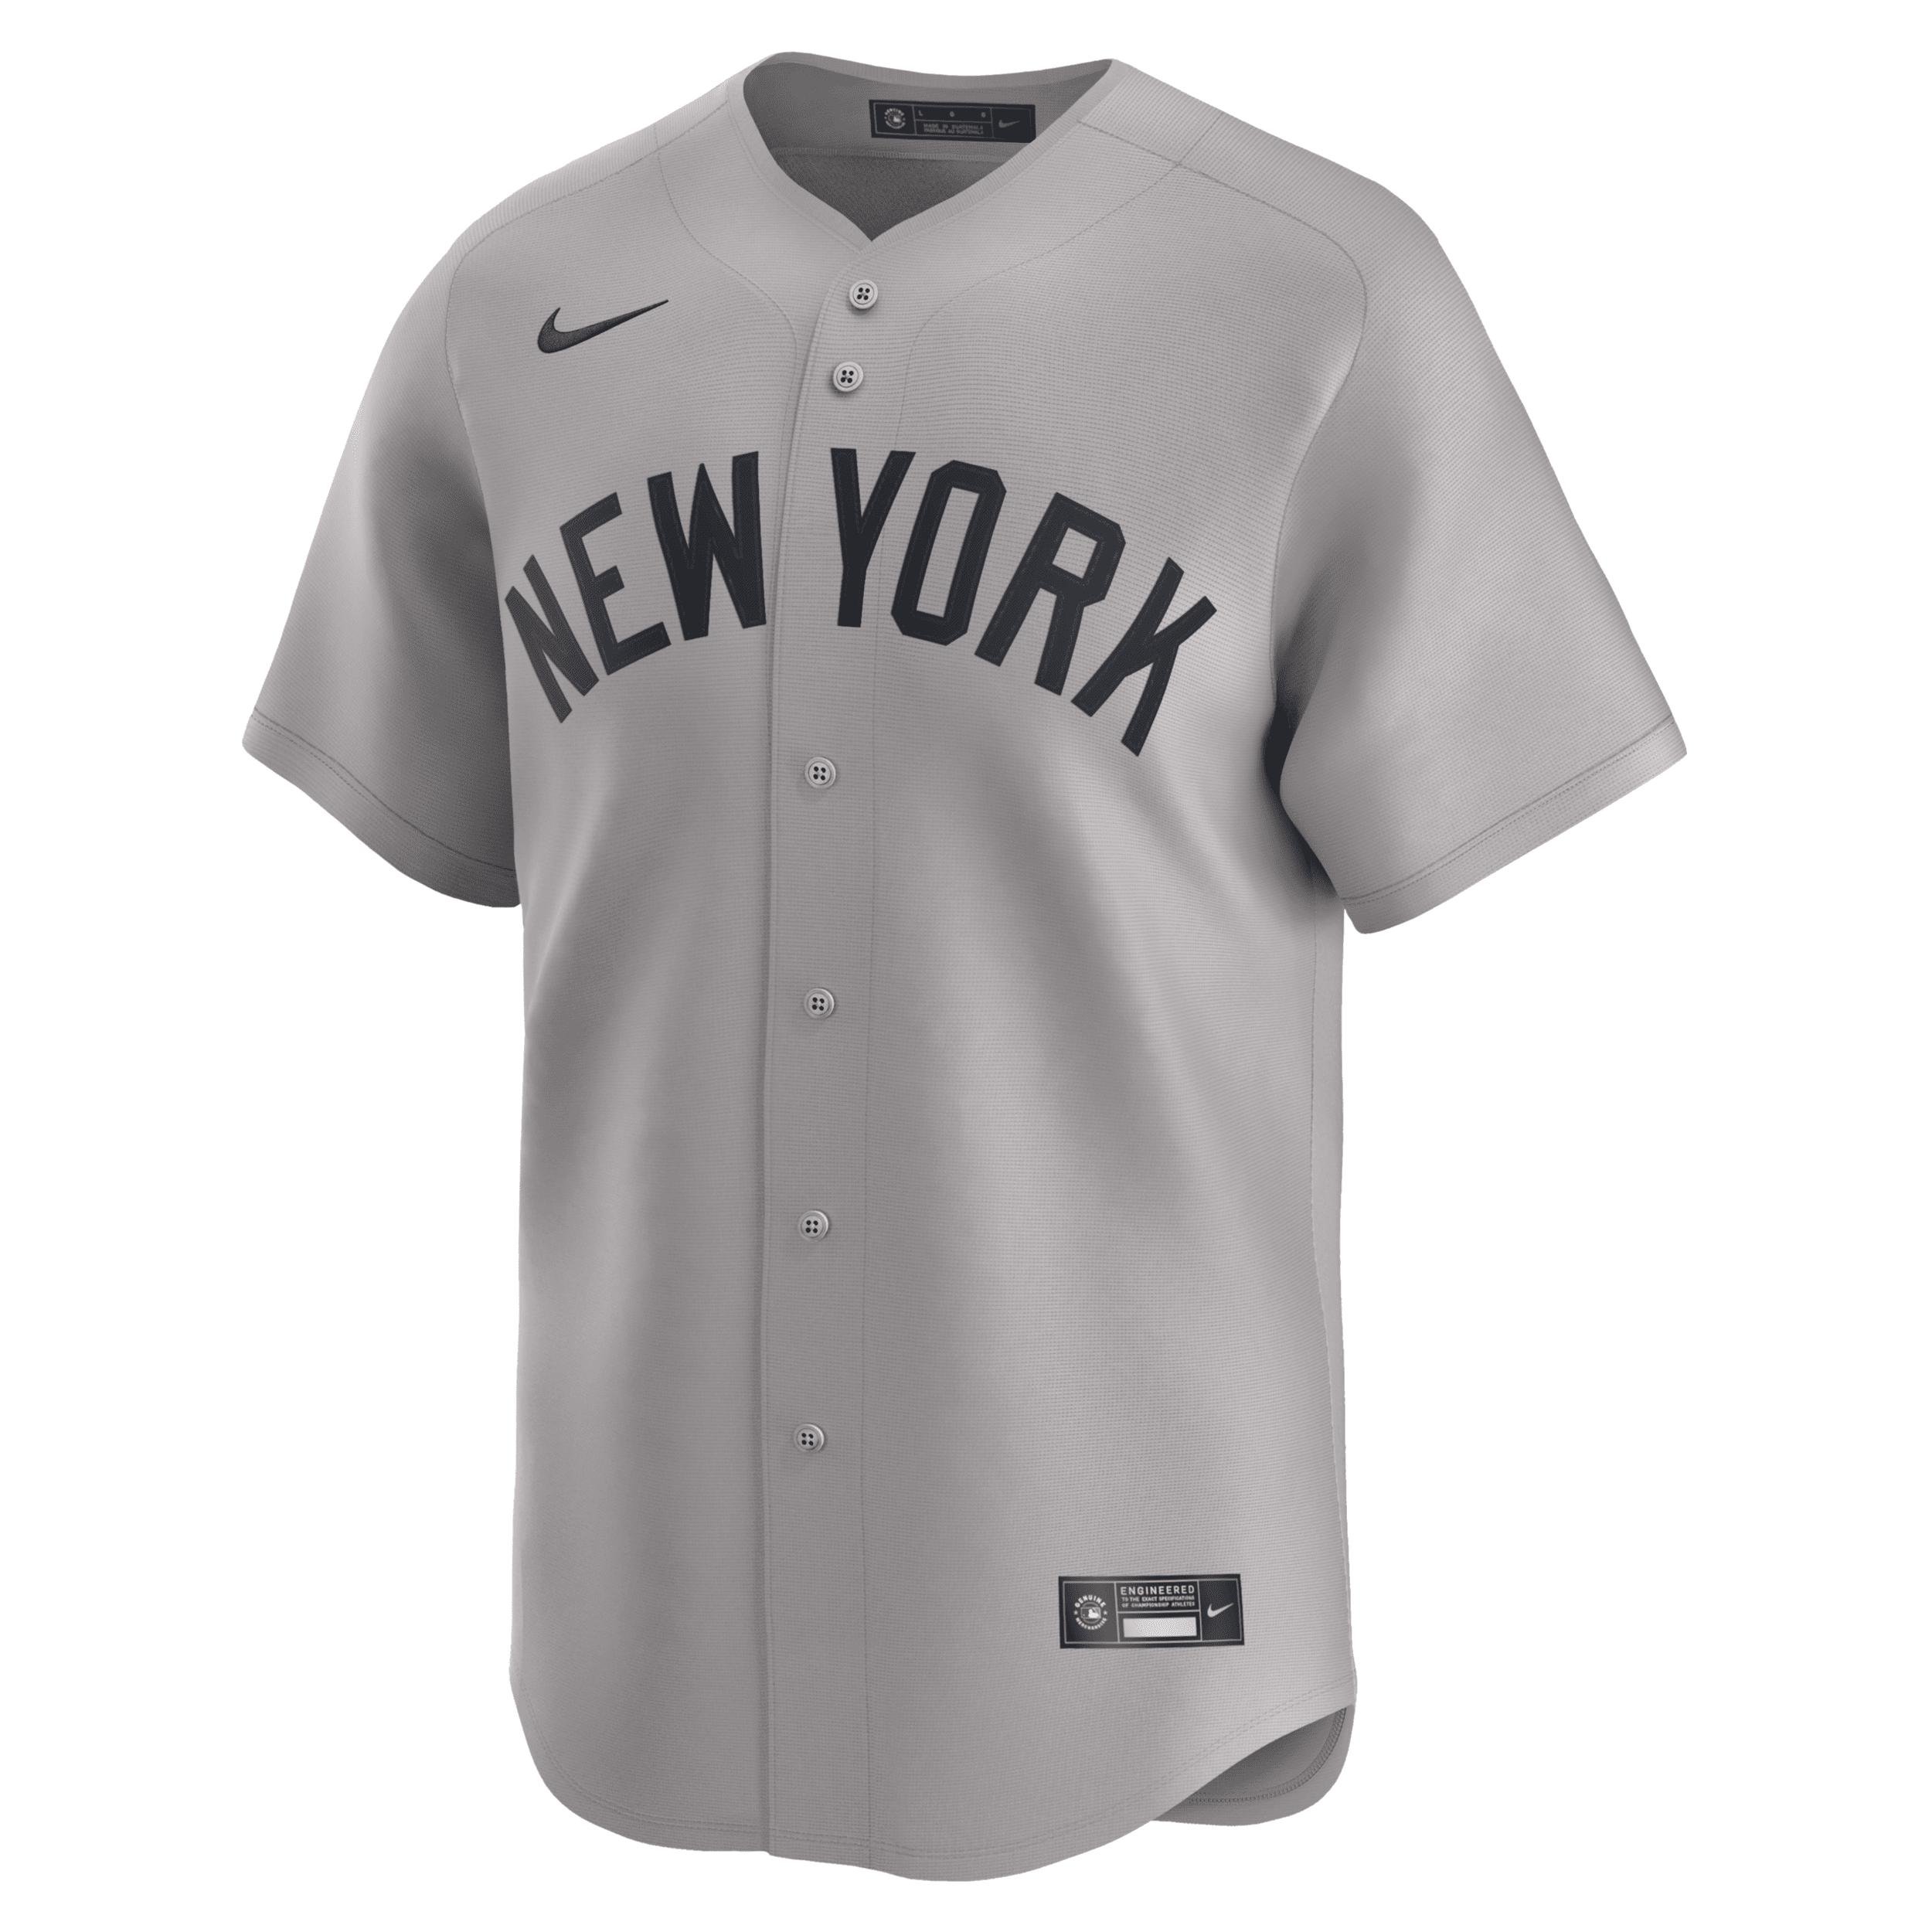 Derek Jeter New York Yankees Nike Men's Dri-FIT ADV MLB Limited Jersey by NIKE